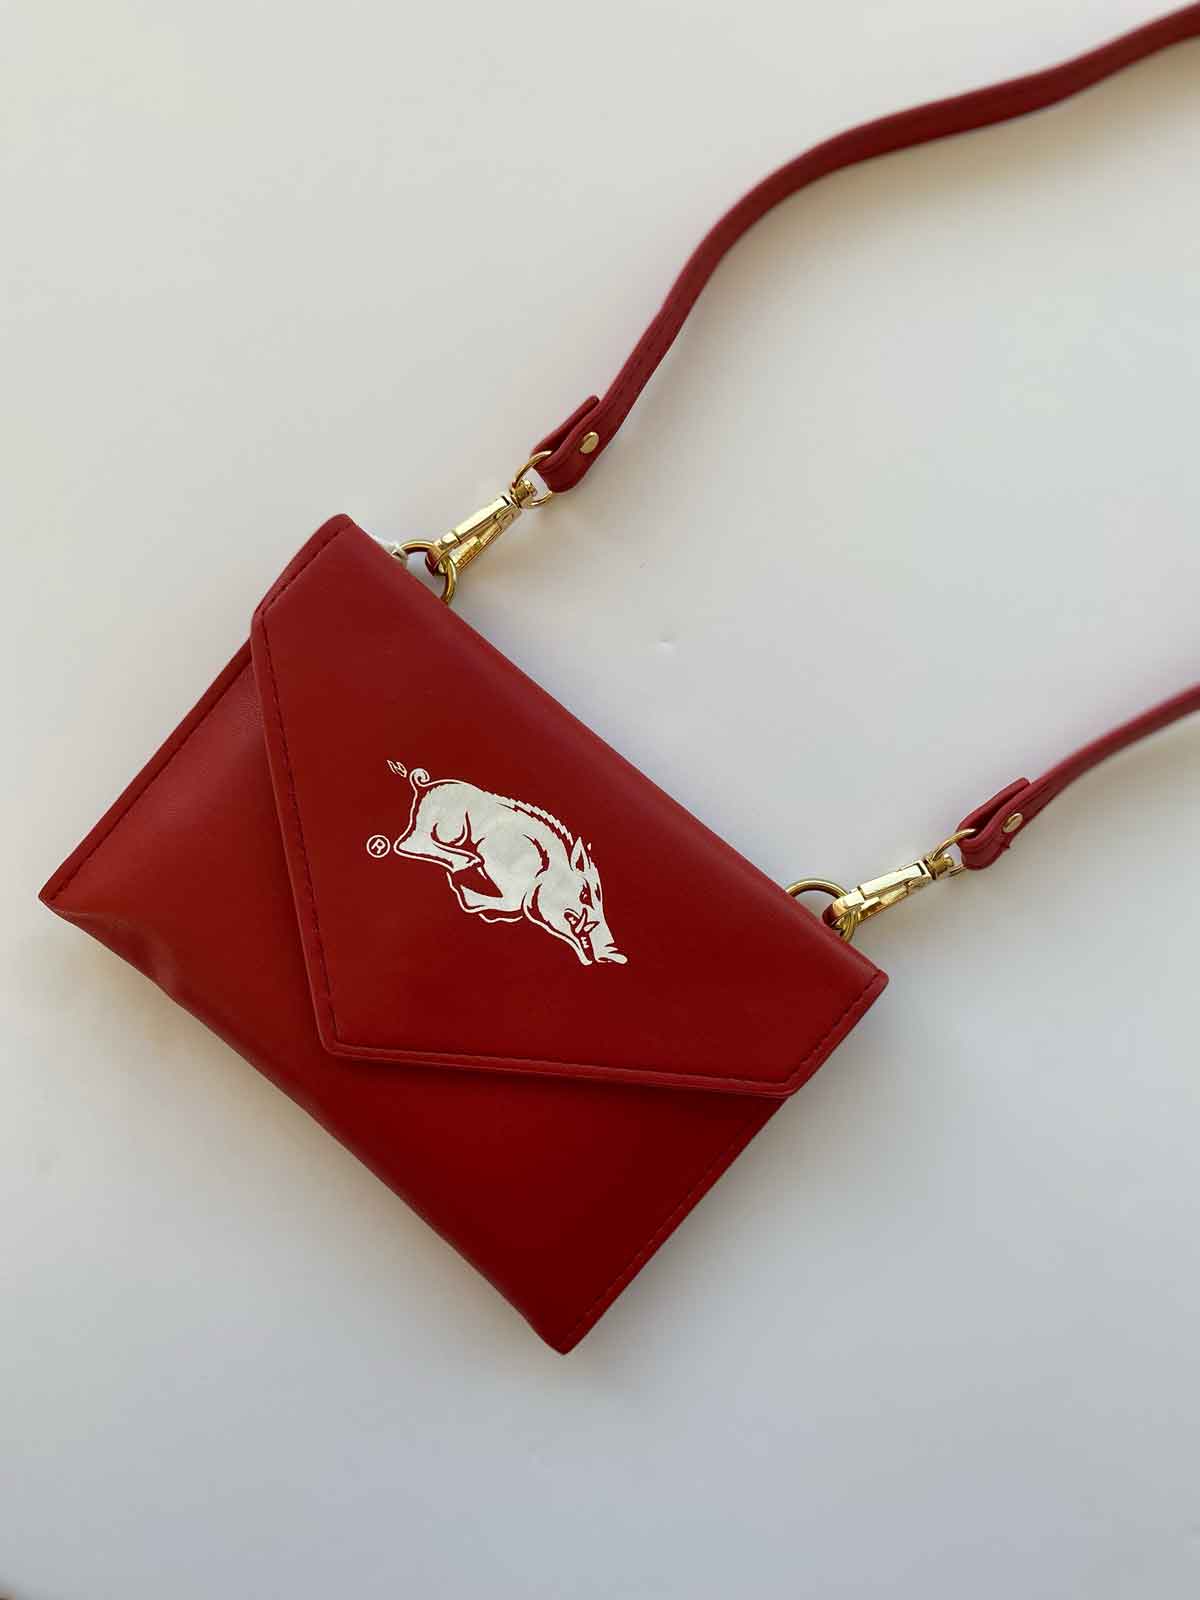 NCAA Arkansas Razorbacks Custom Name Women Handbags And Women Purse Wallet  - Growkoc